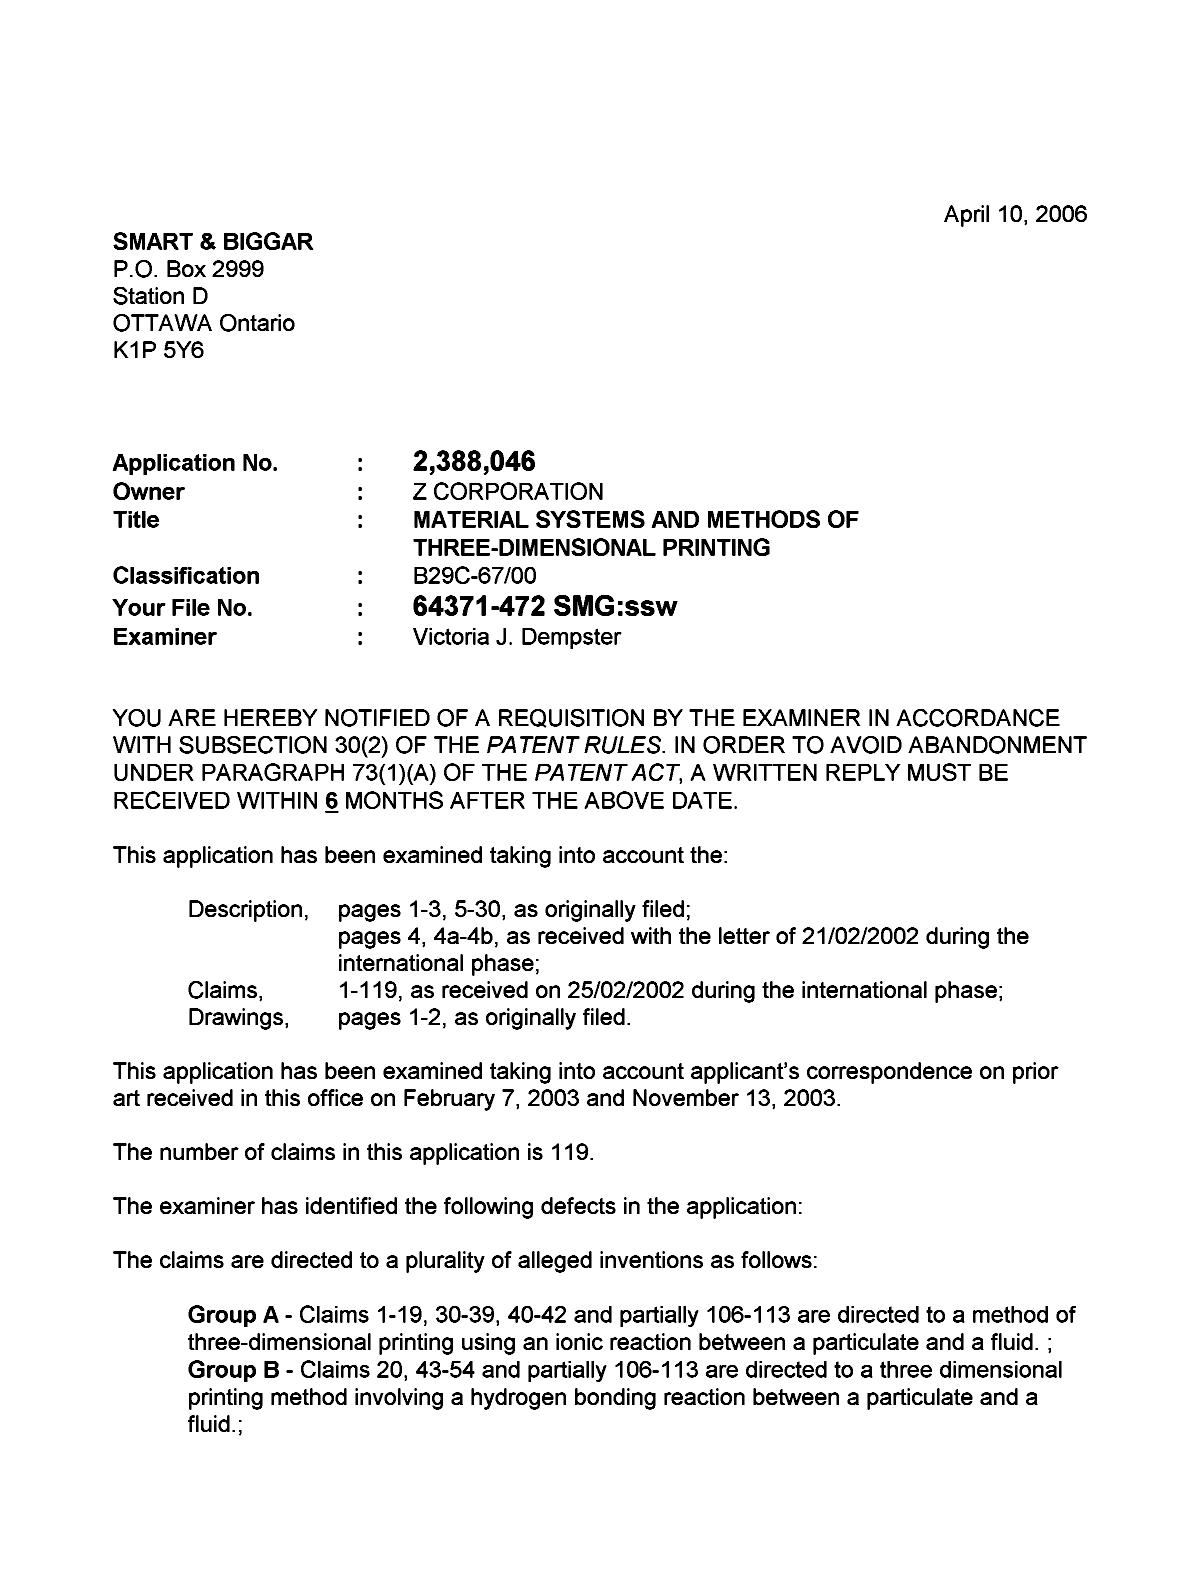 Canadian Patent Document 2388046. Prosecution-Amendment 20060410. Image 1 of 3